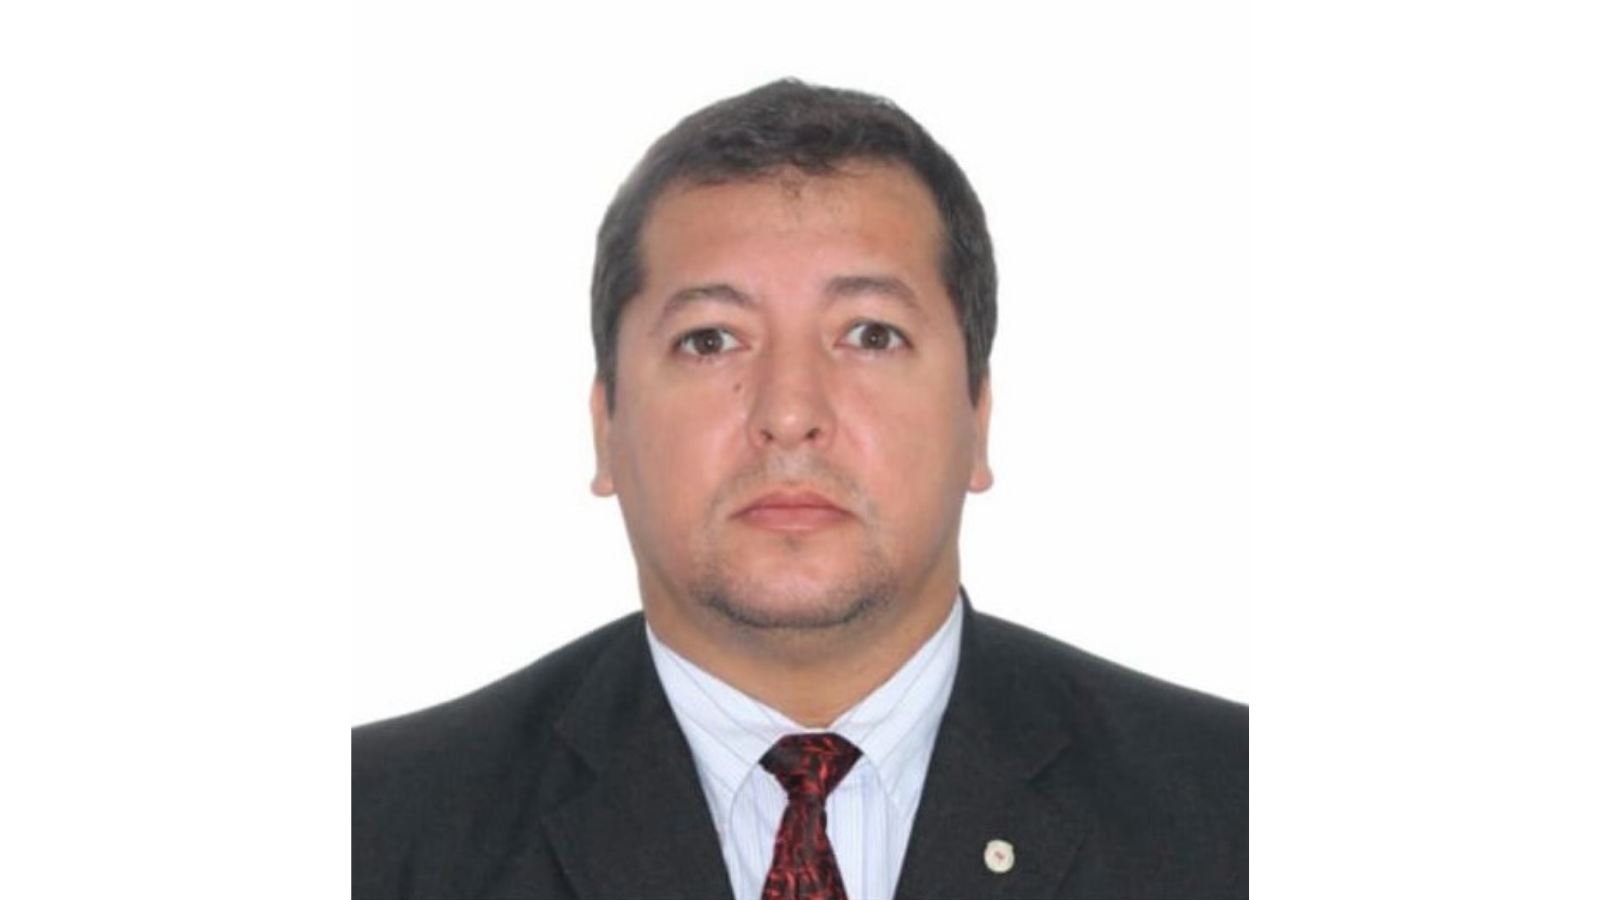 Carlos A. Vera Bordaberry Zalazar